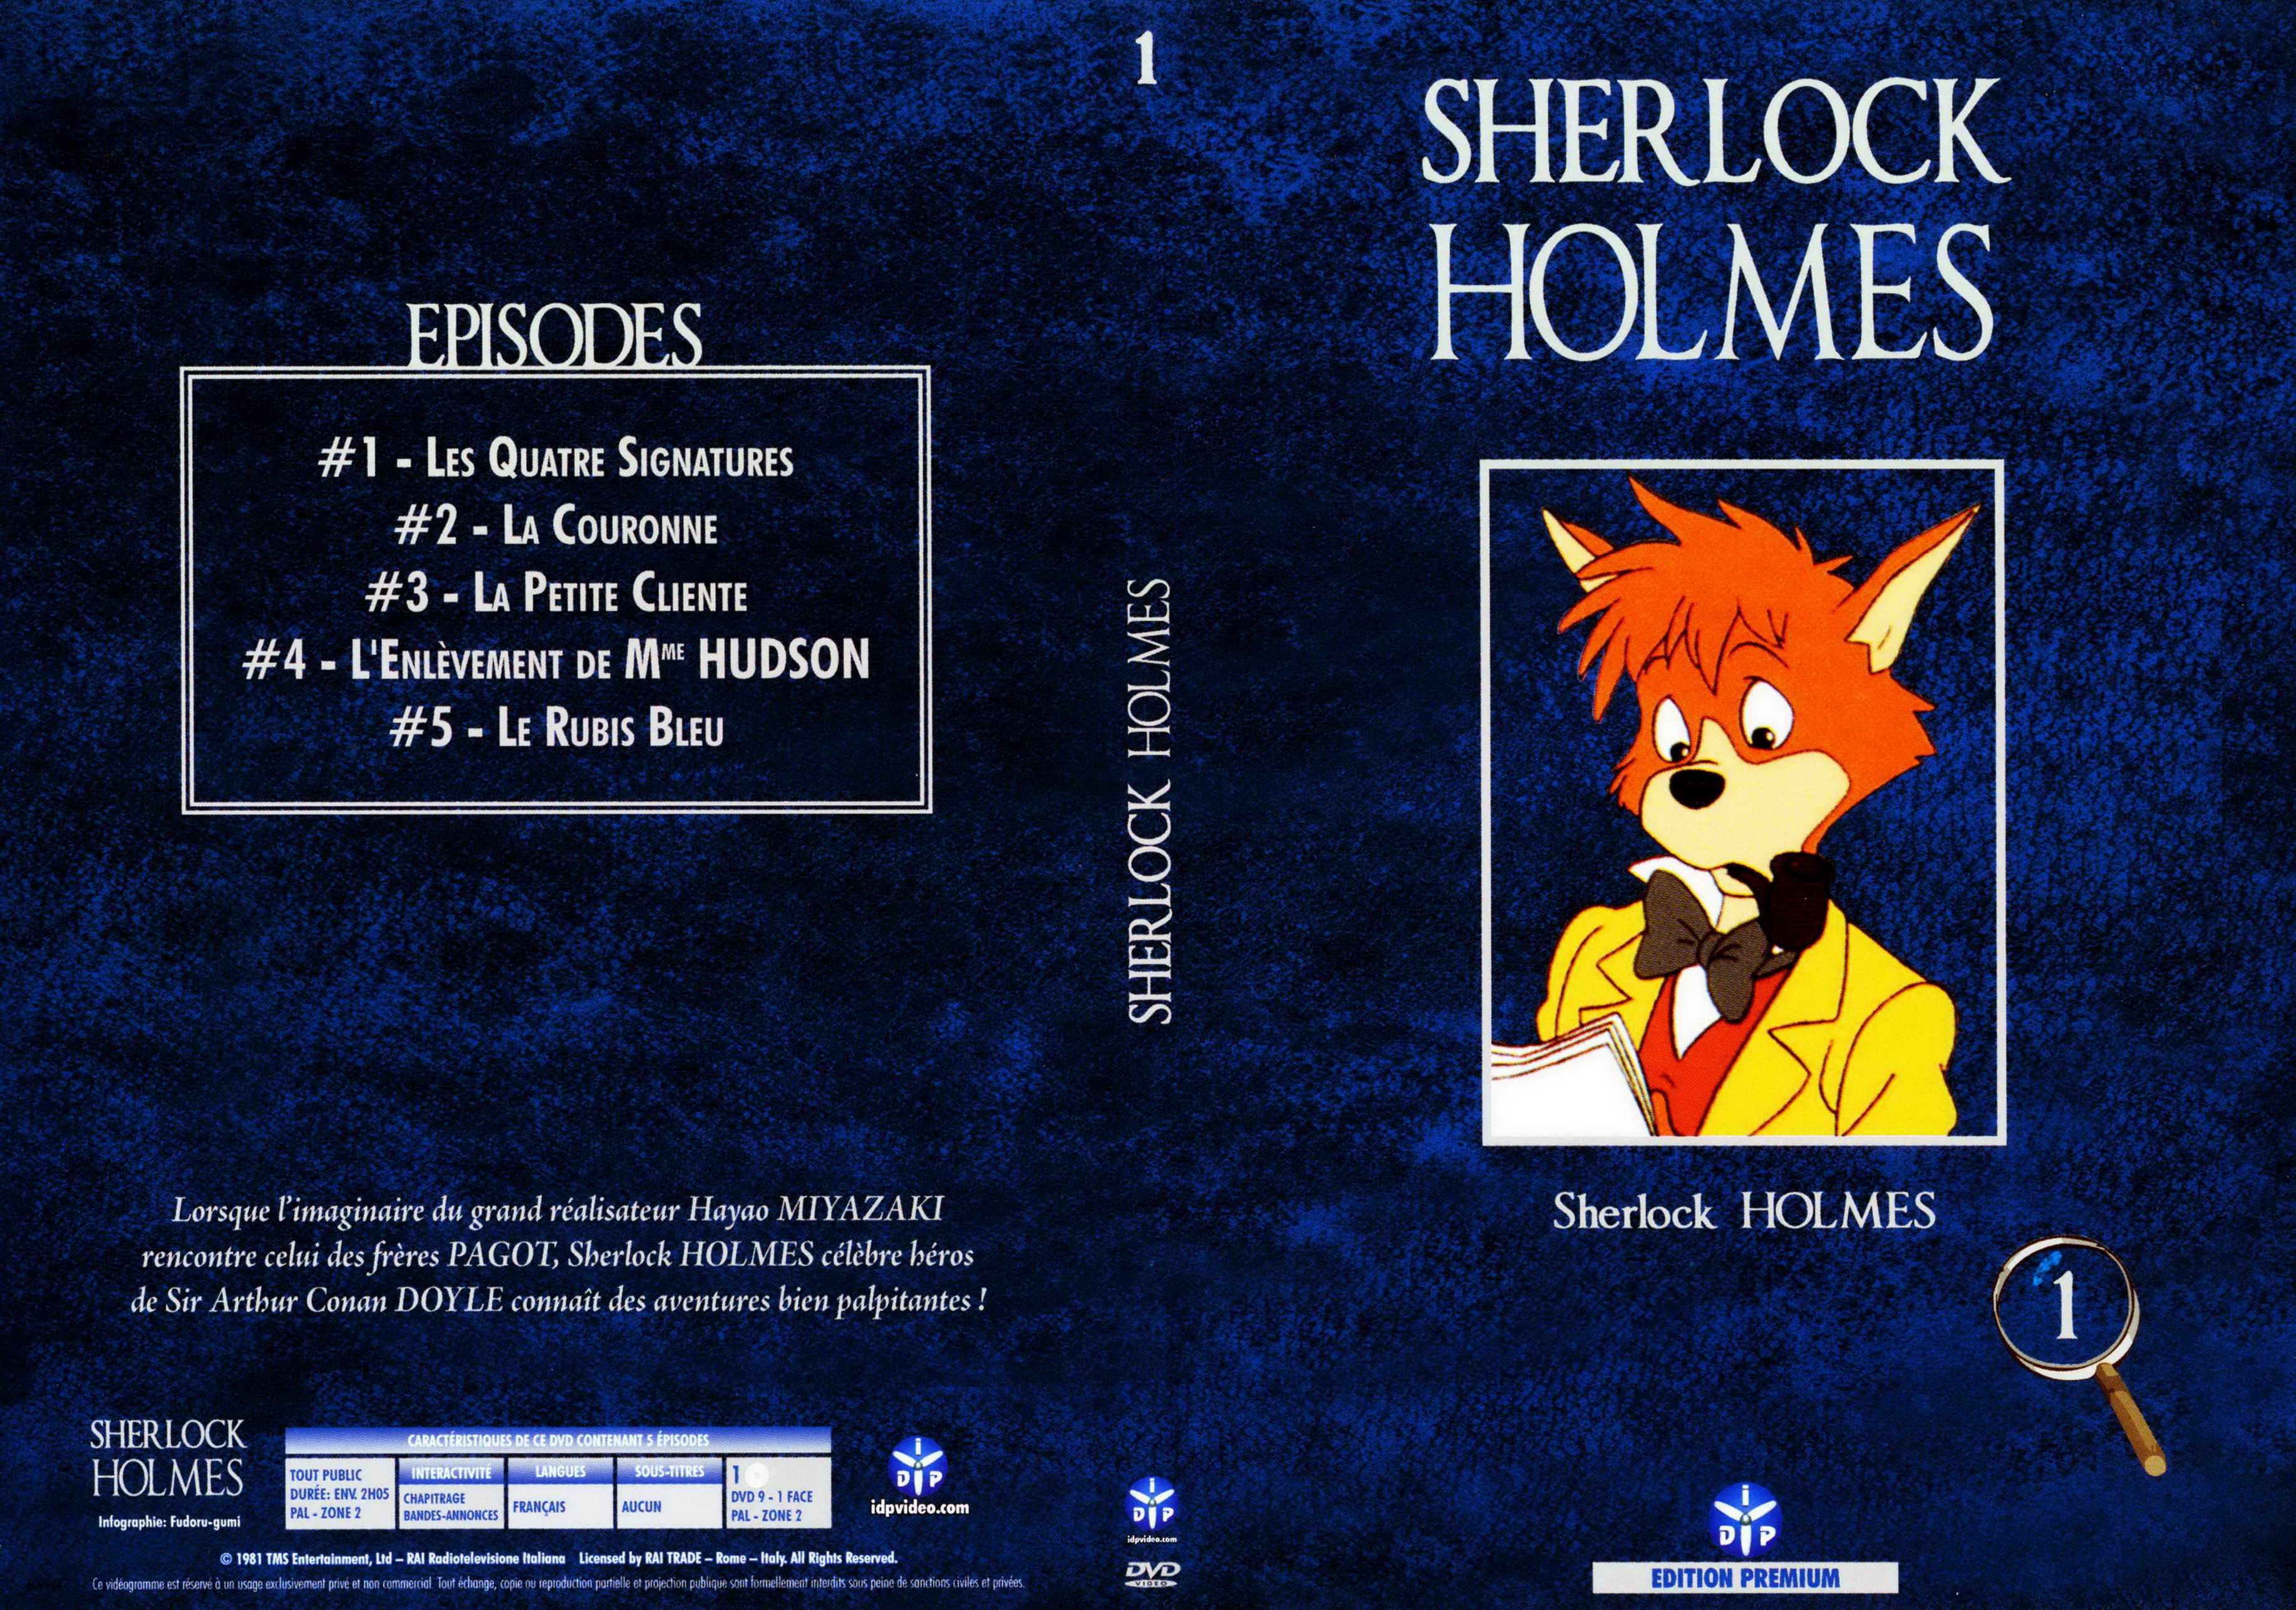 Jaquette DVD Sherlock Holmes vol 1 v2